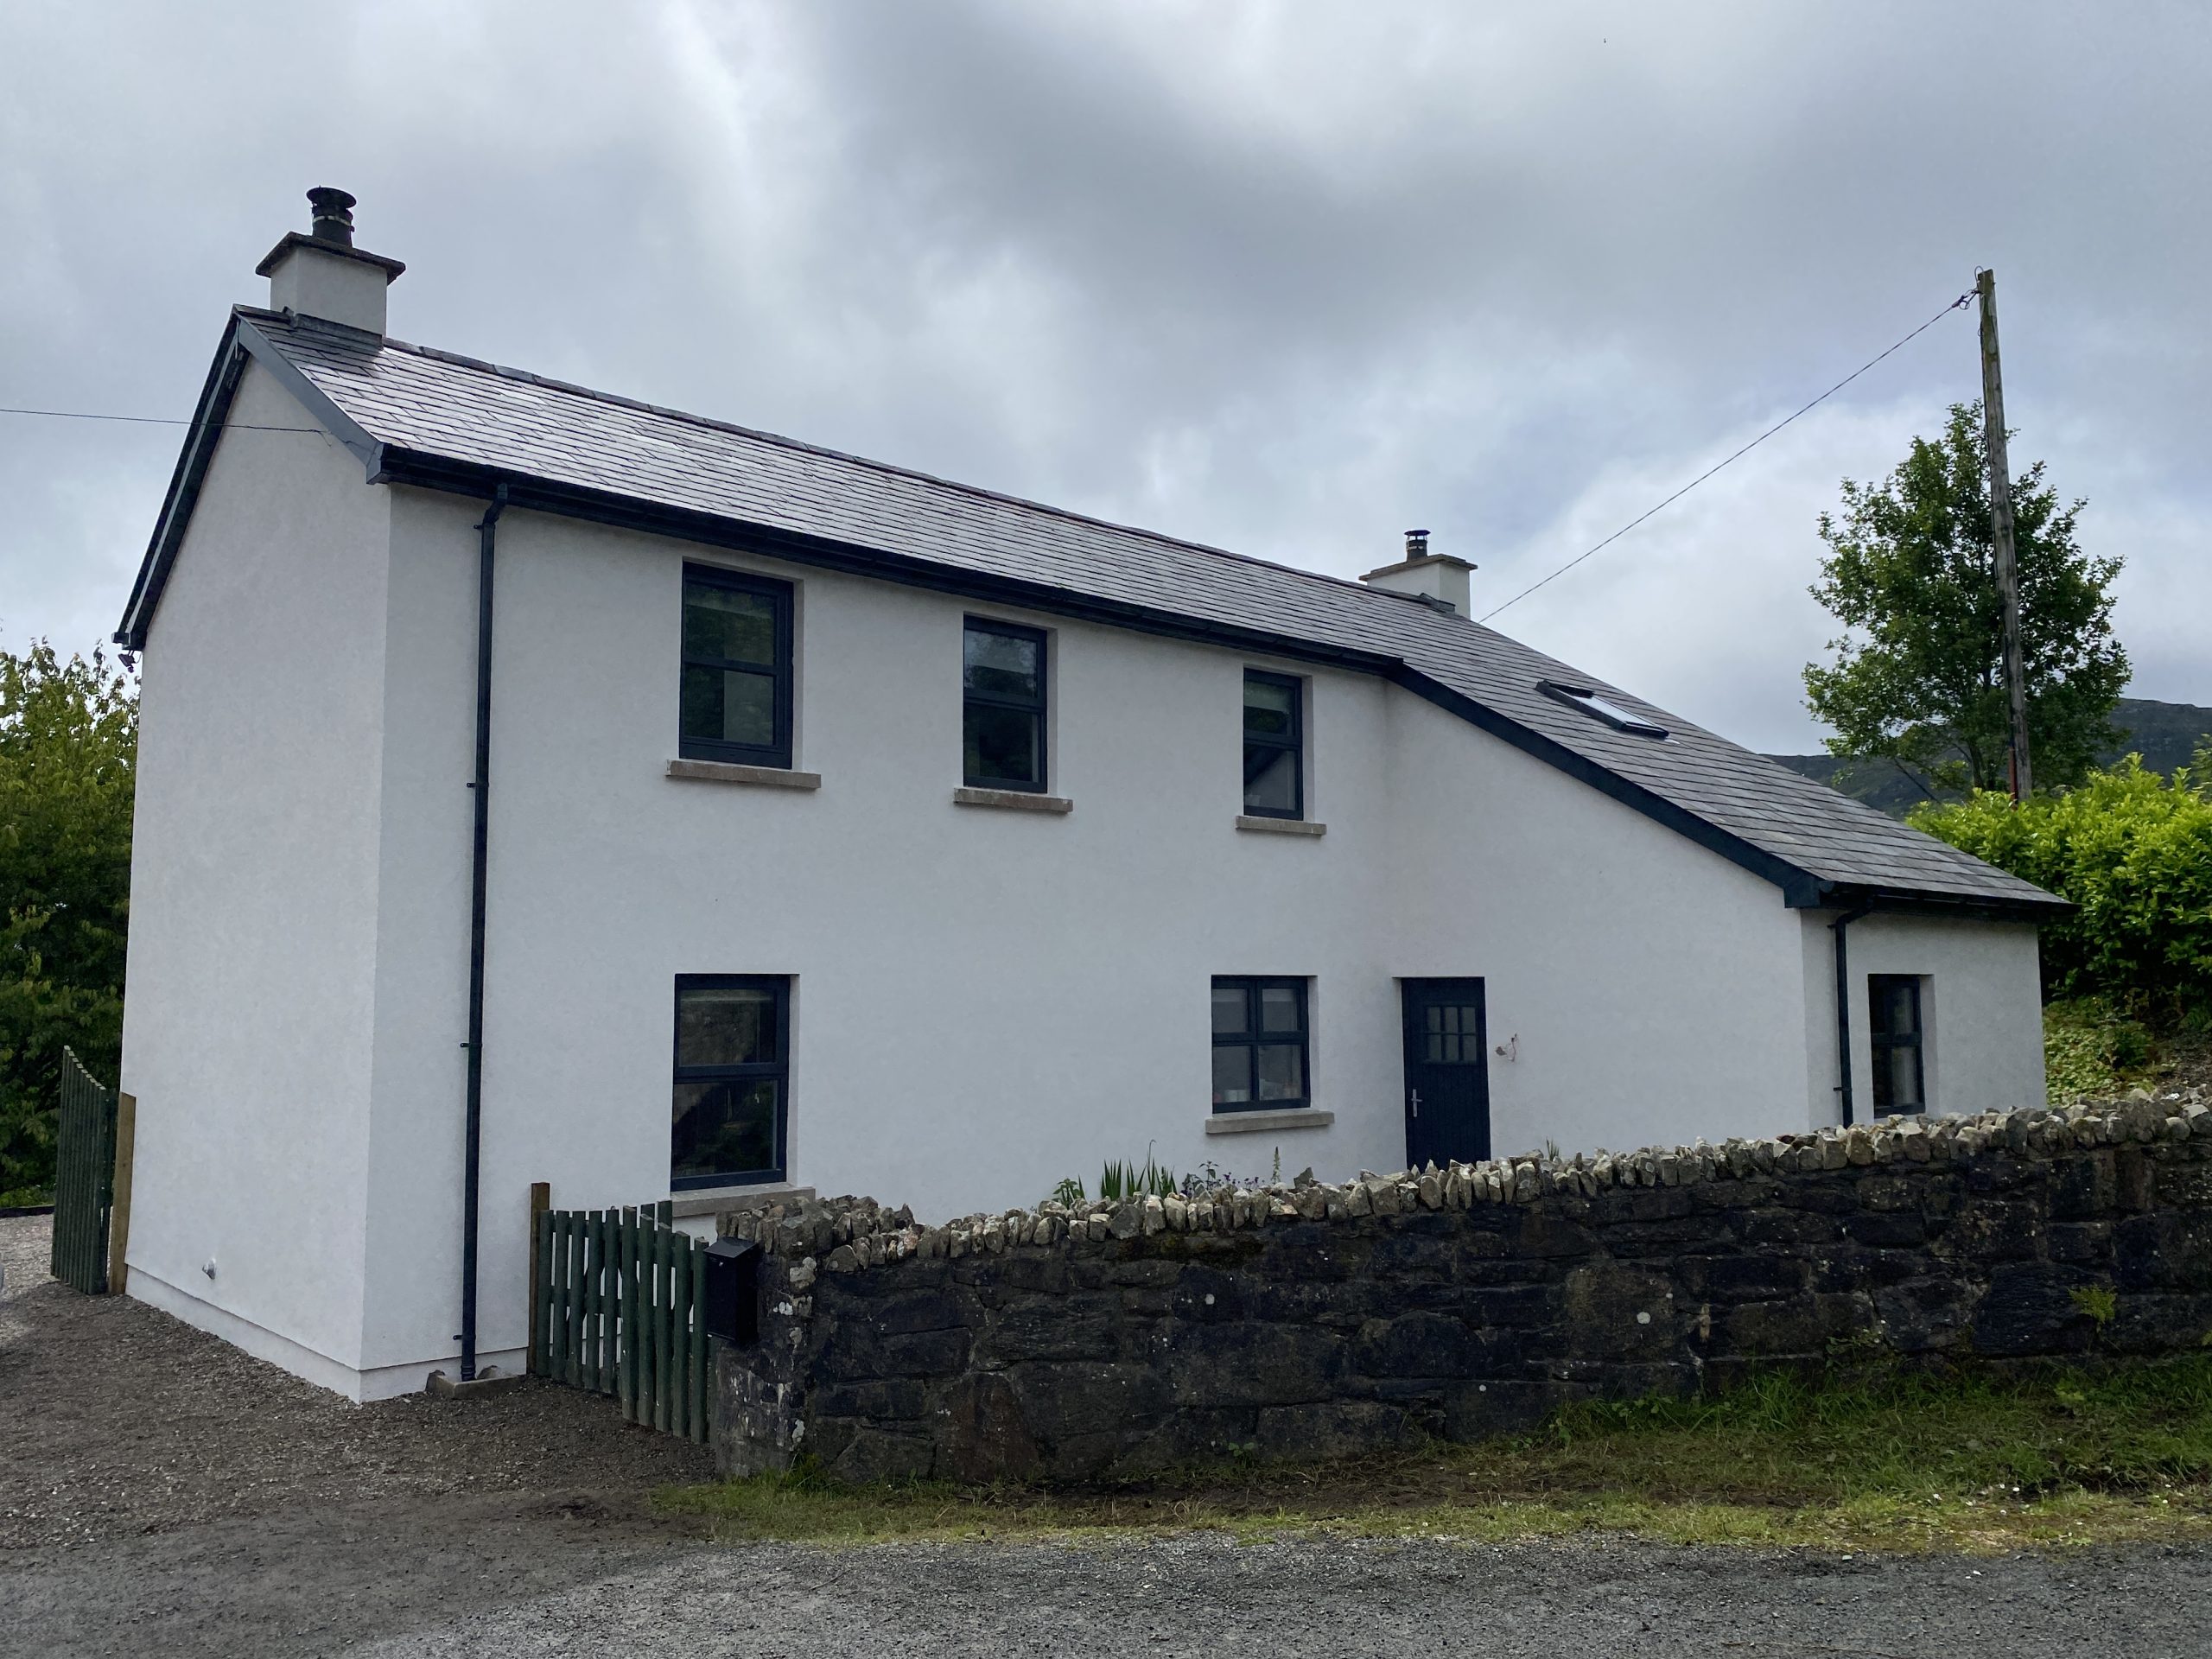 Rural renovation near Kerrykeel, Co. Donegal